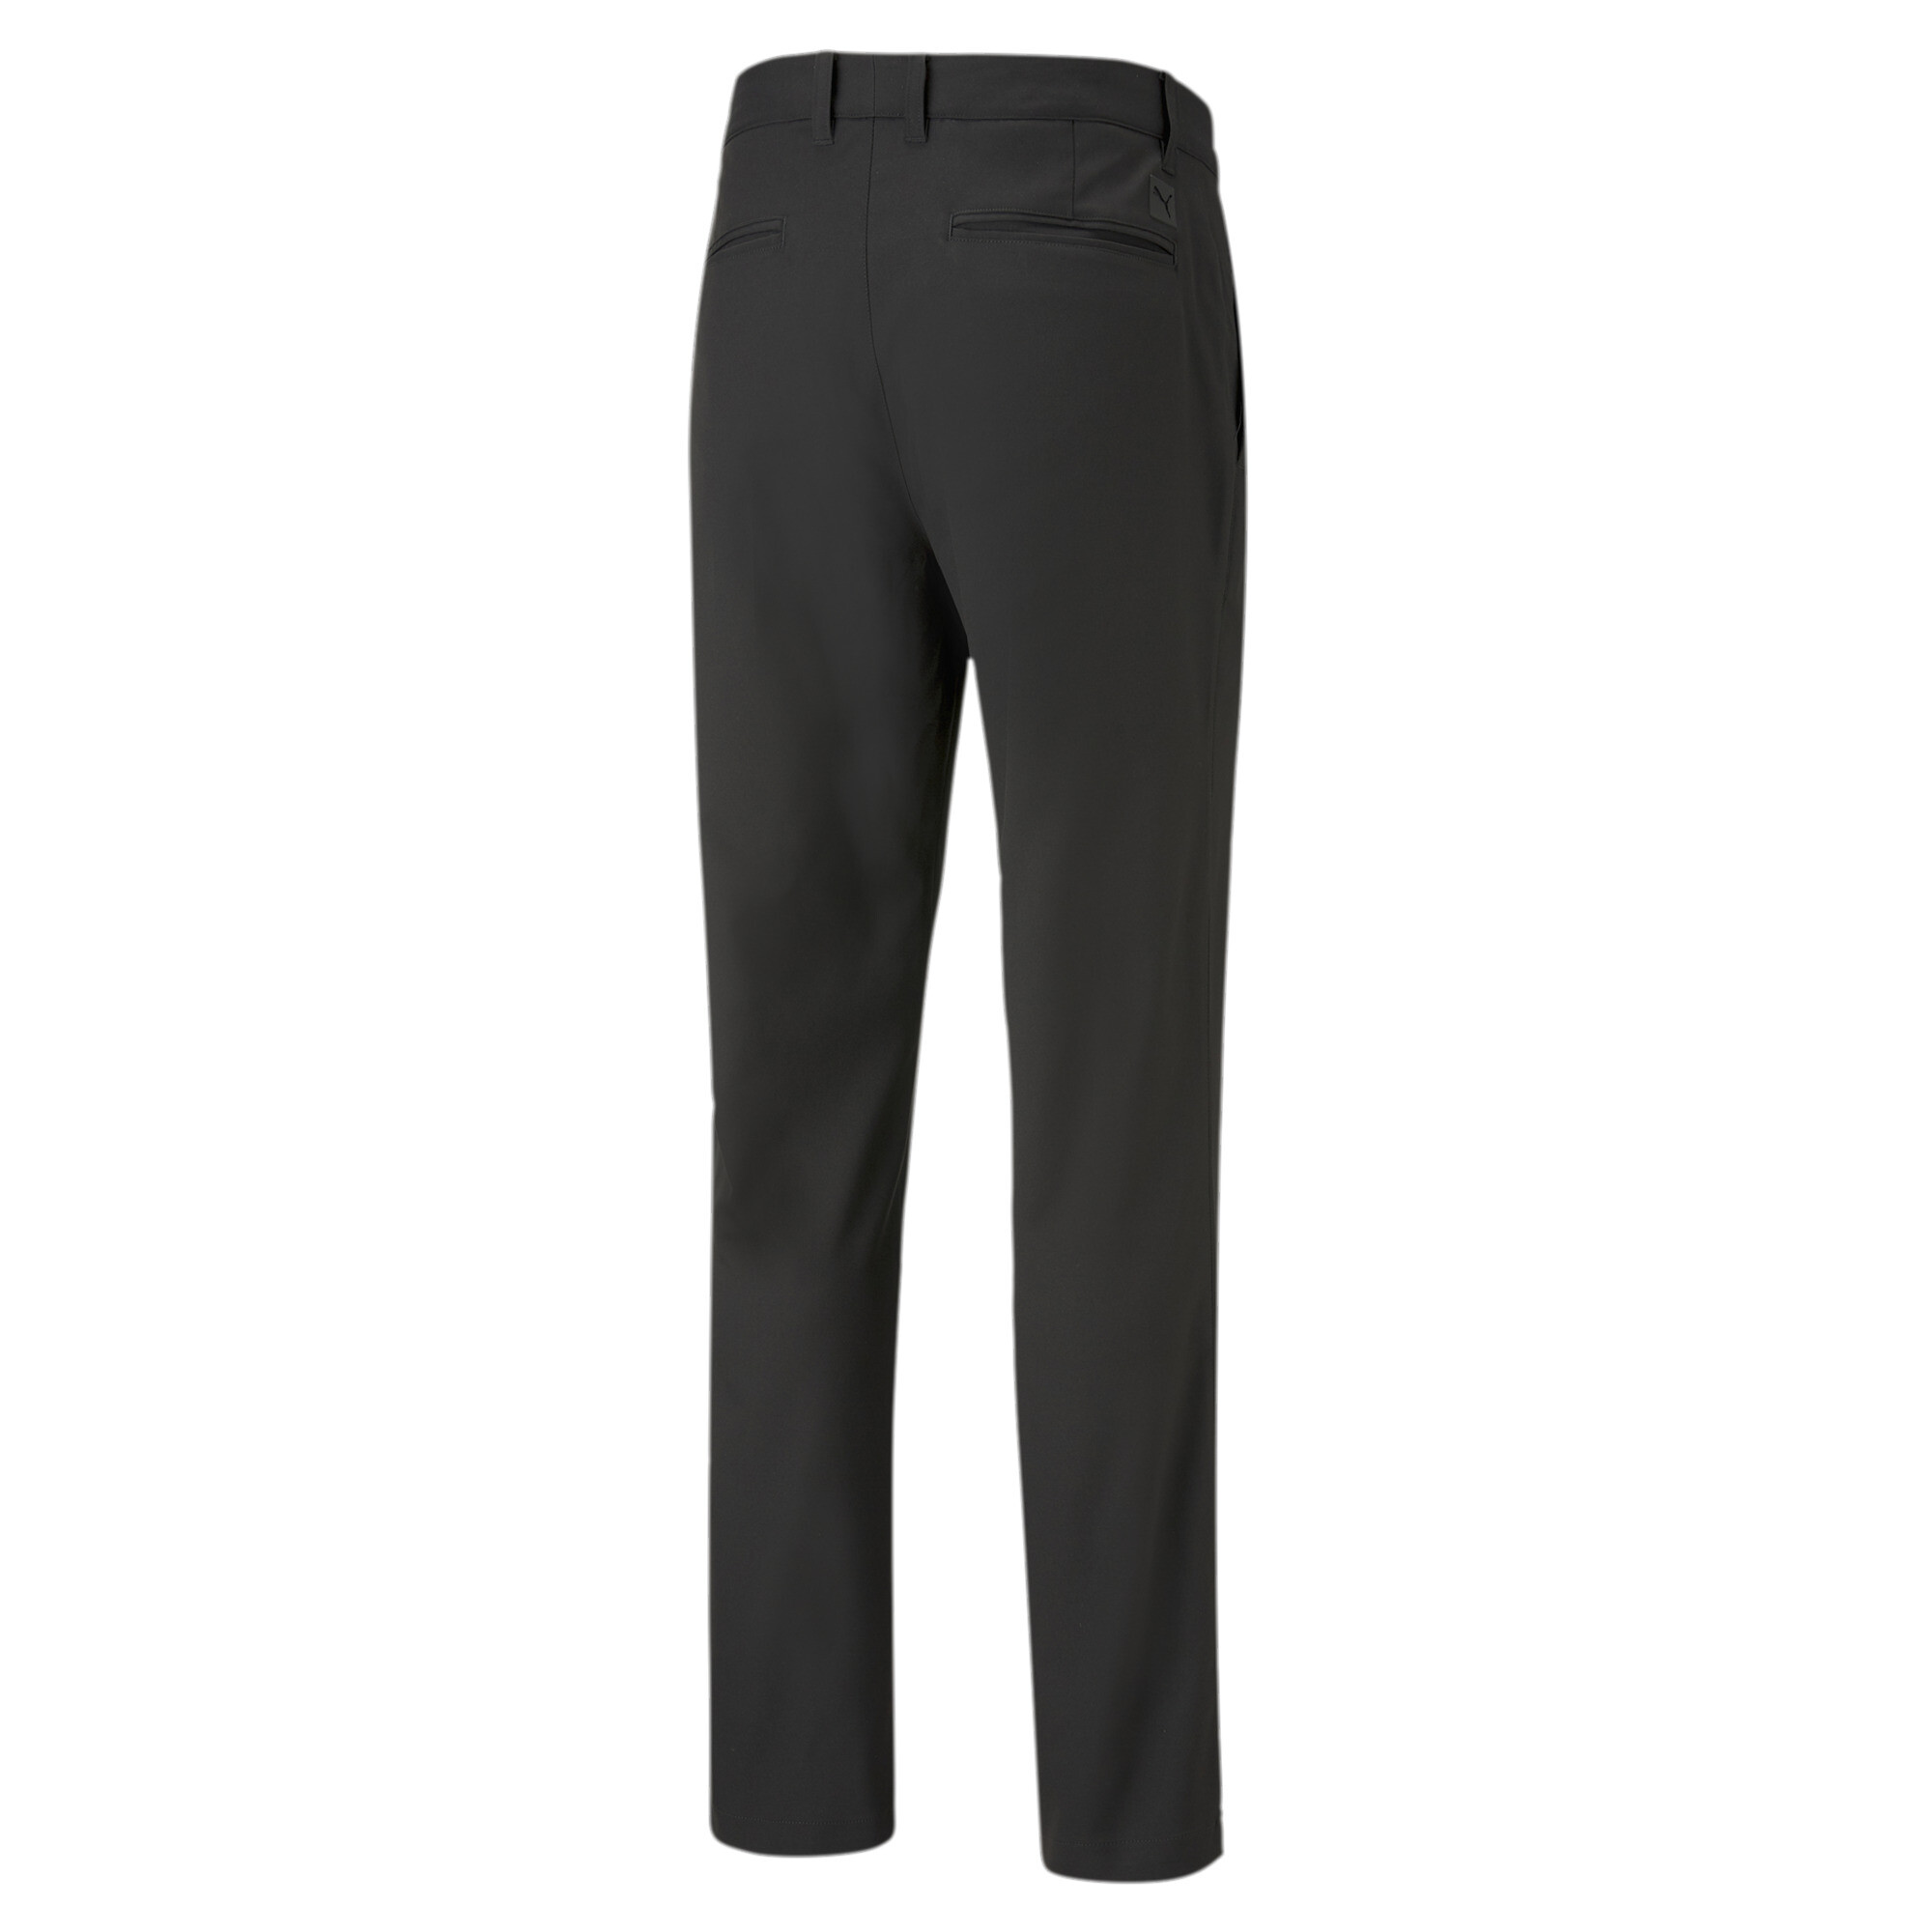 Men's Puma Dealer Golf Pants, Black, Size 35/34, Clothing